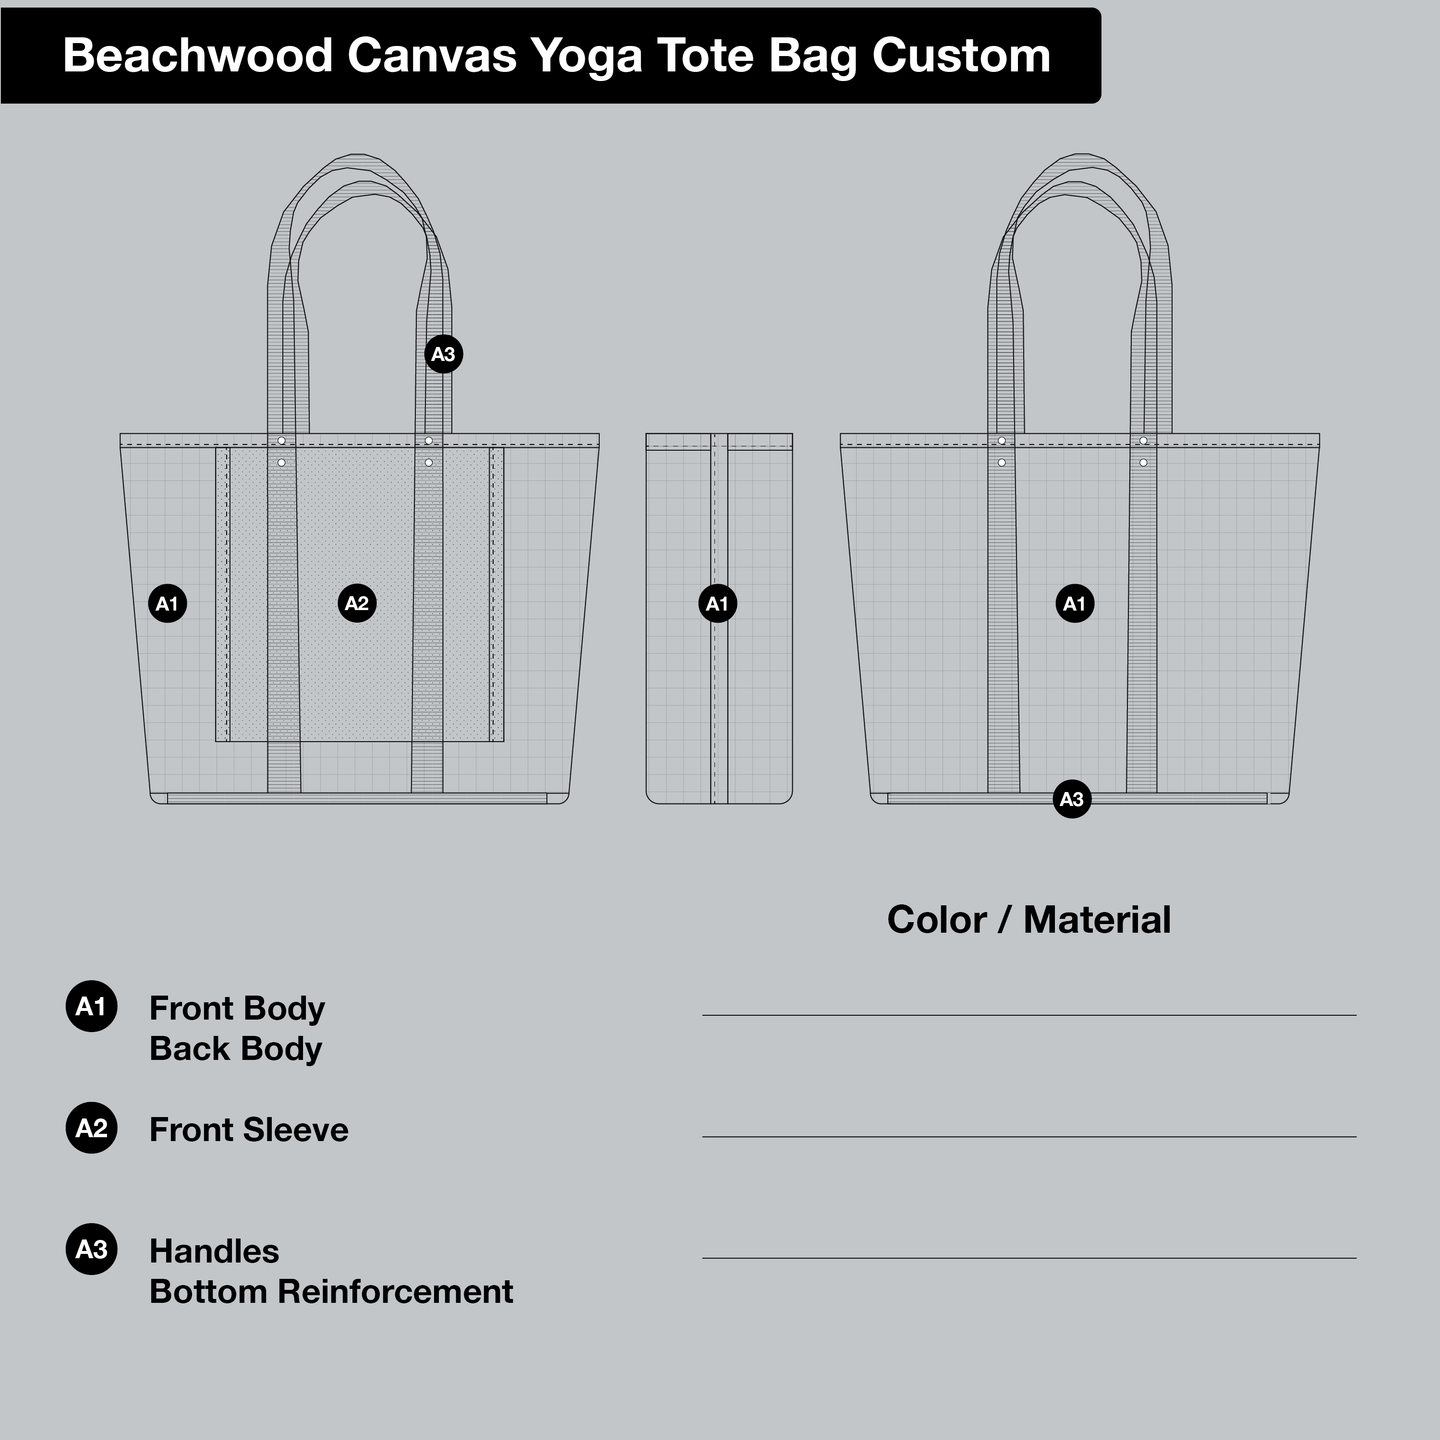 Beachwood Canvas Yoga Tote Bag Custom